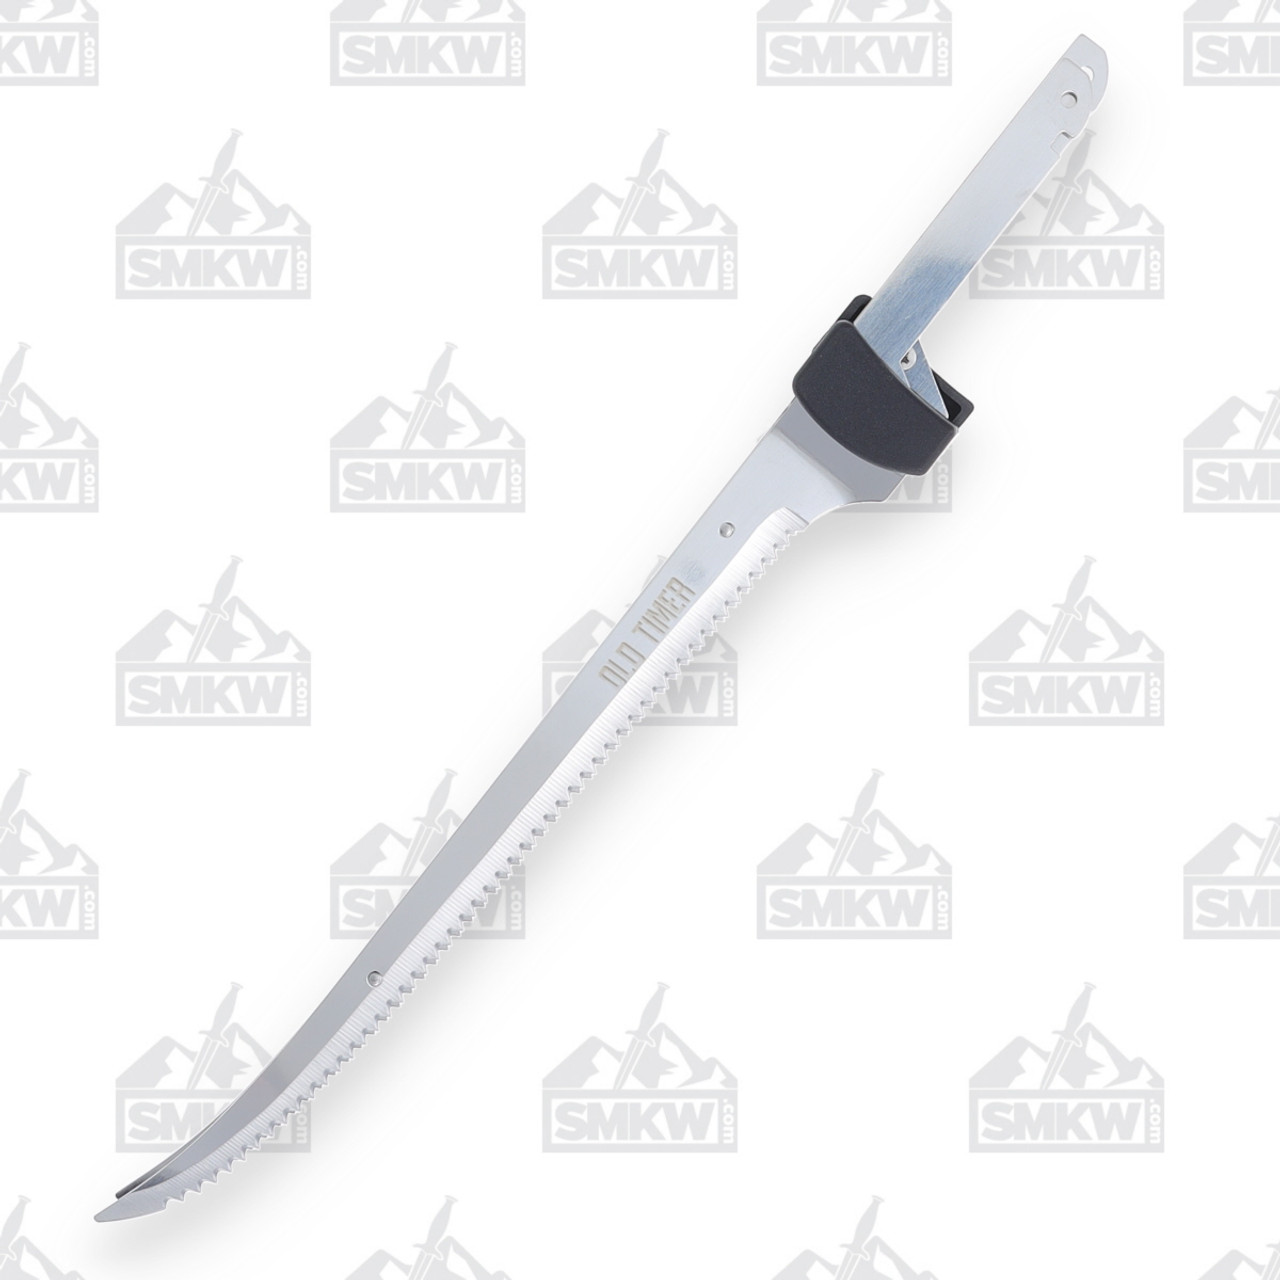 Schrade Old Timer 110v Electric Fillet Knife 8in Replaceable Blade - Corded